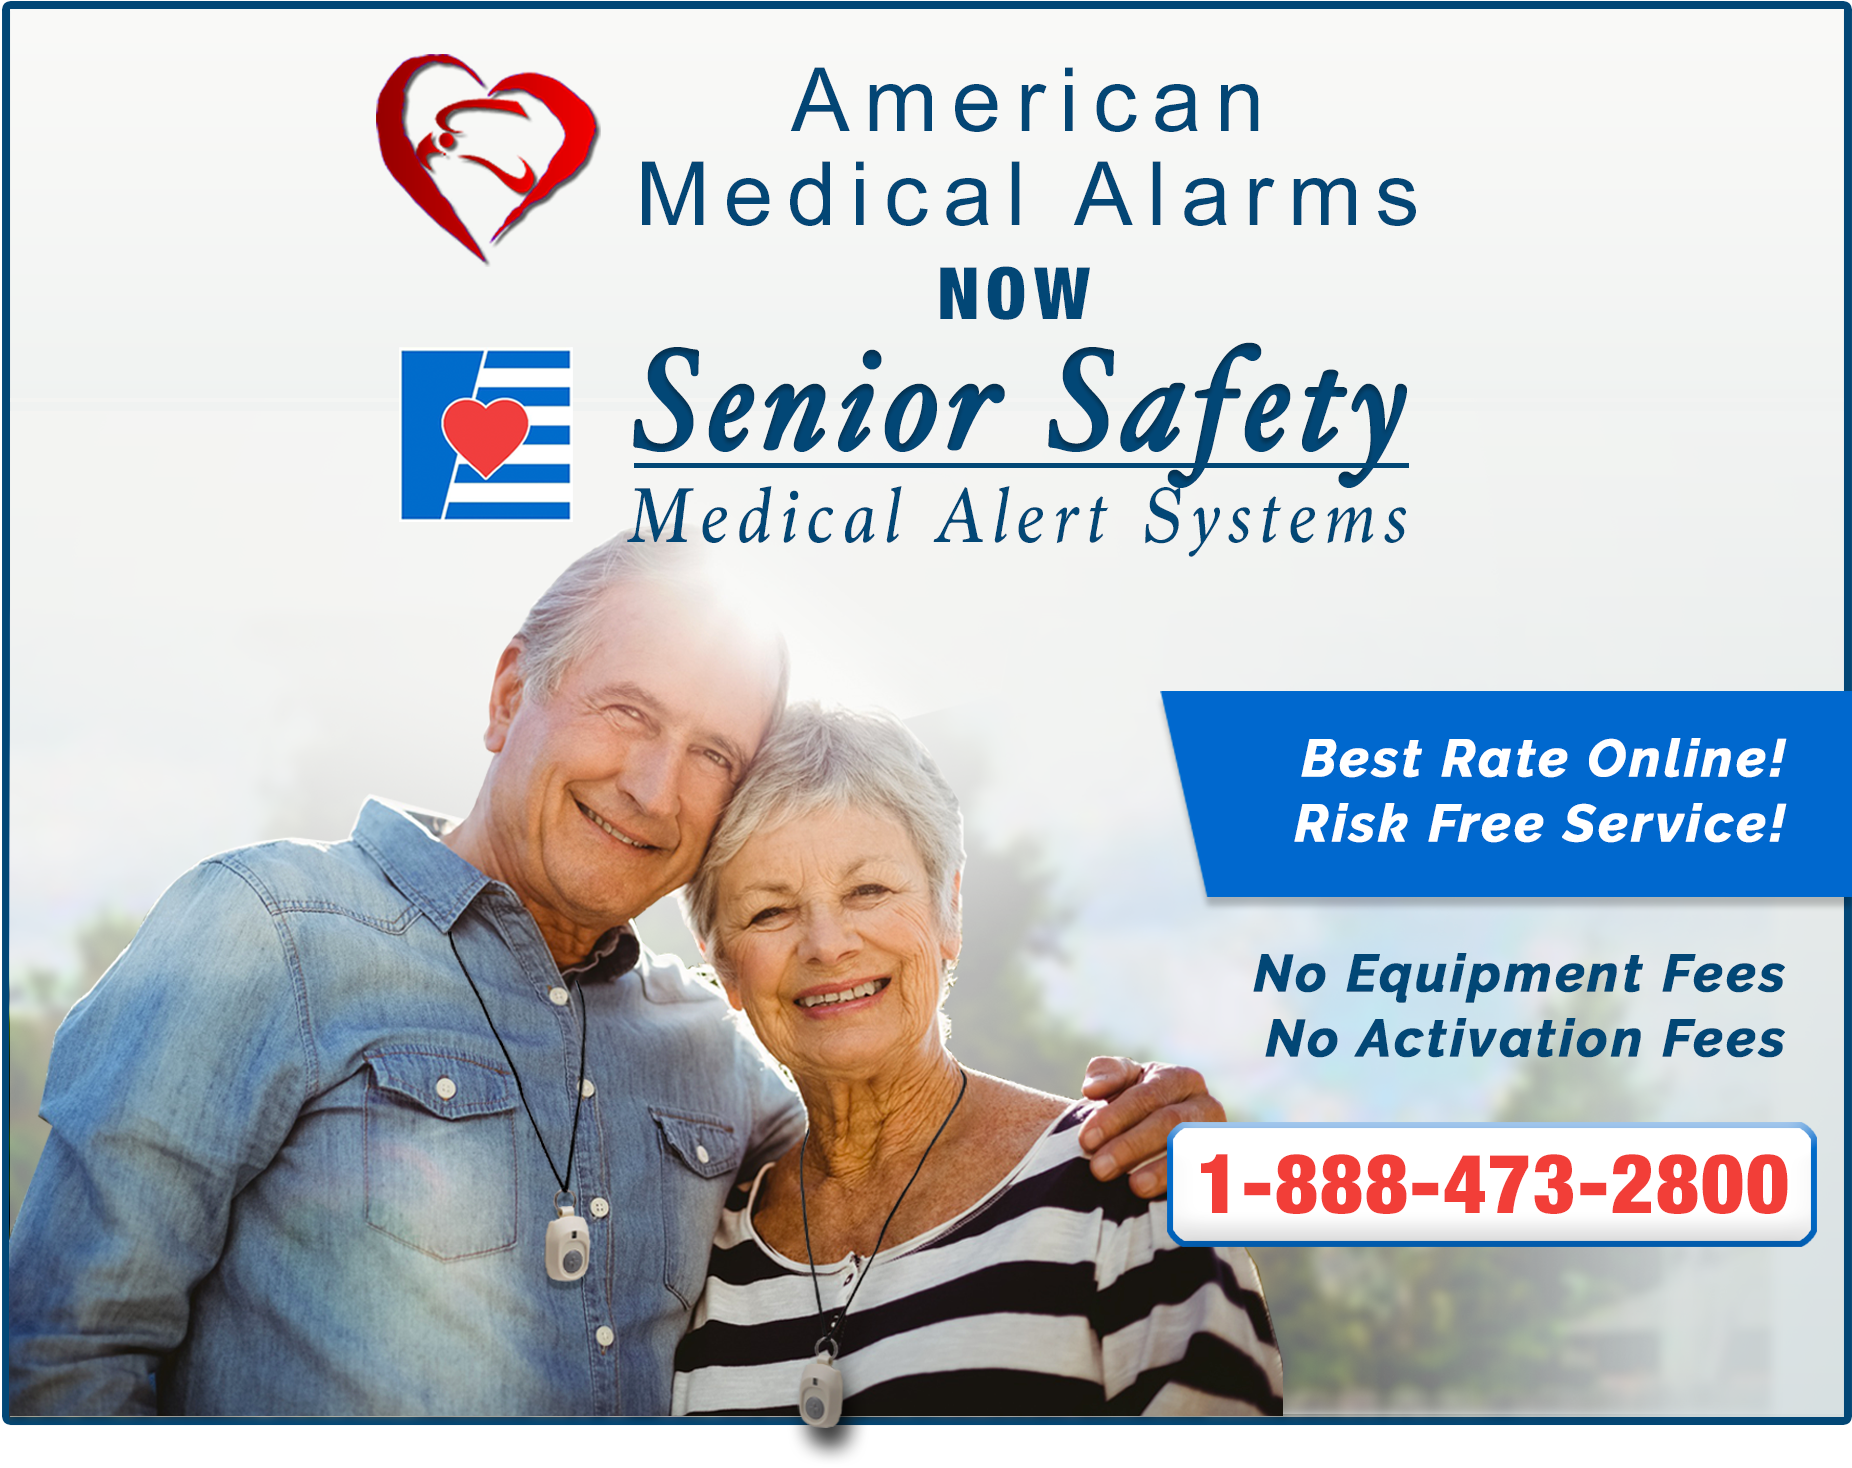 American Medical Alarms on SeniorSafety.com